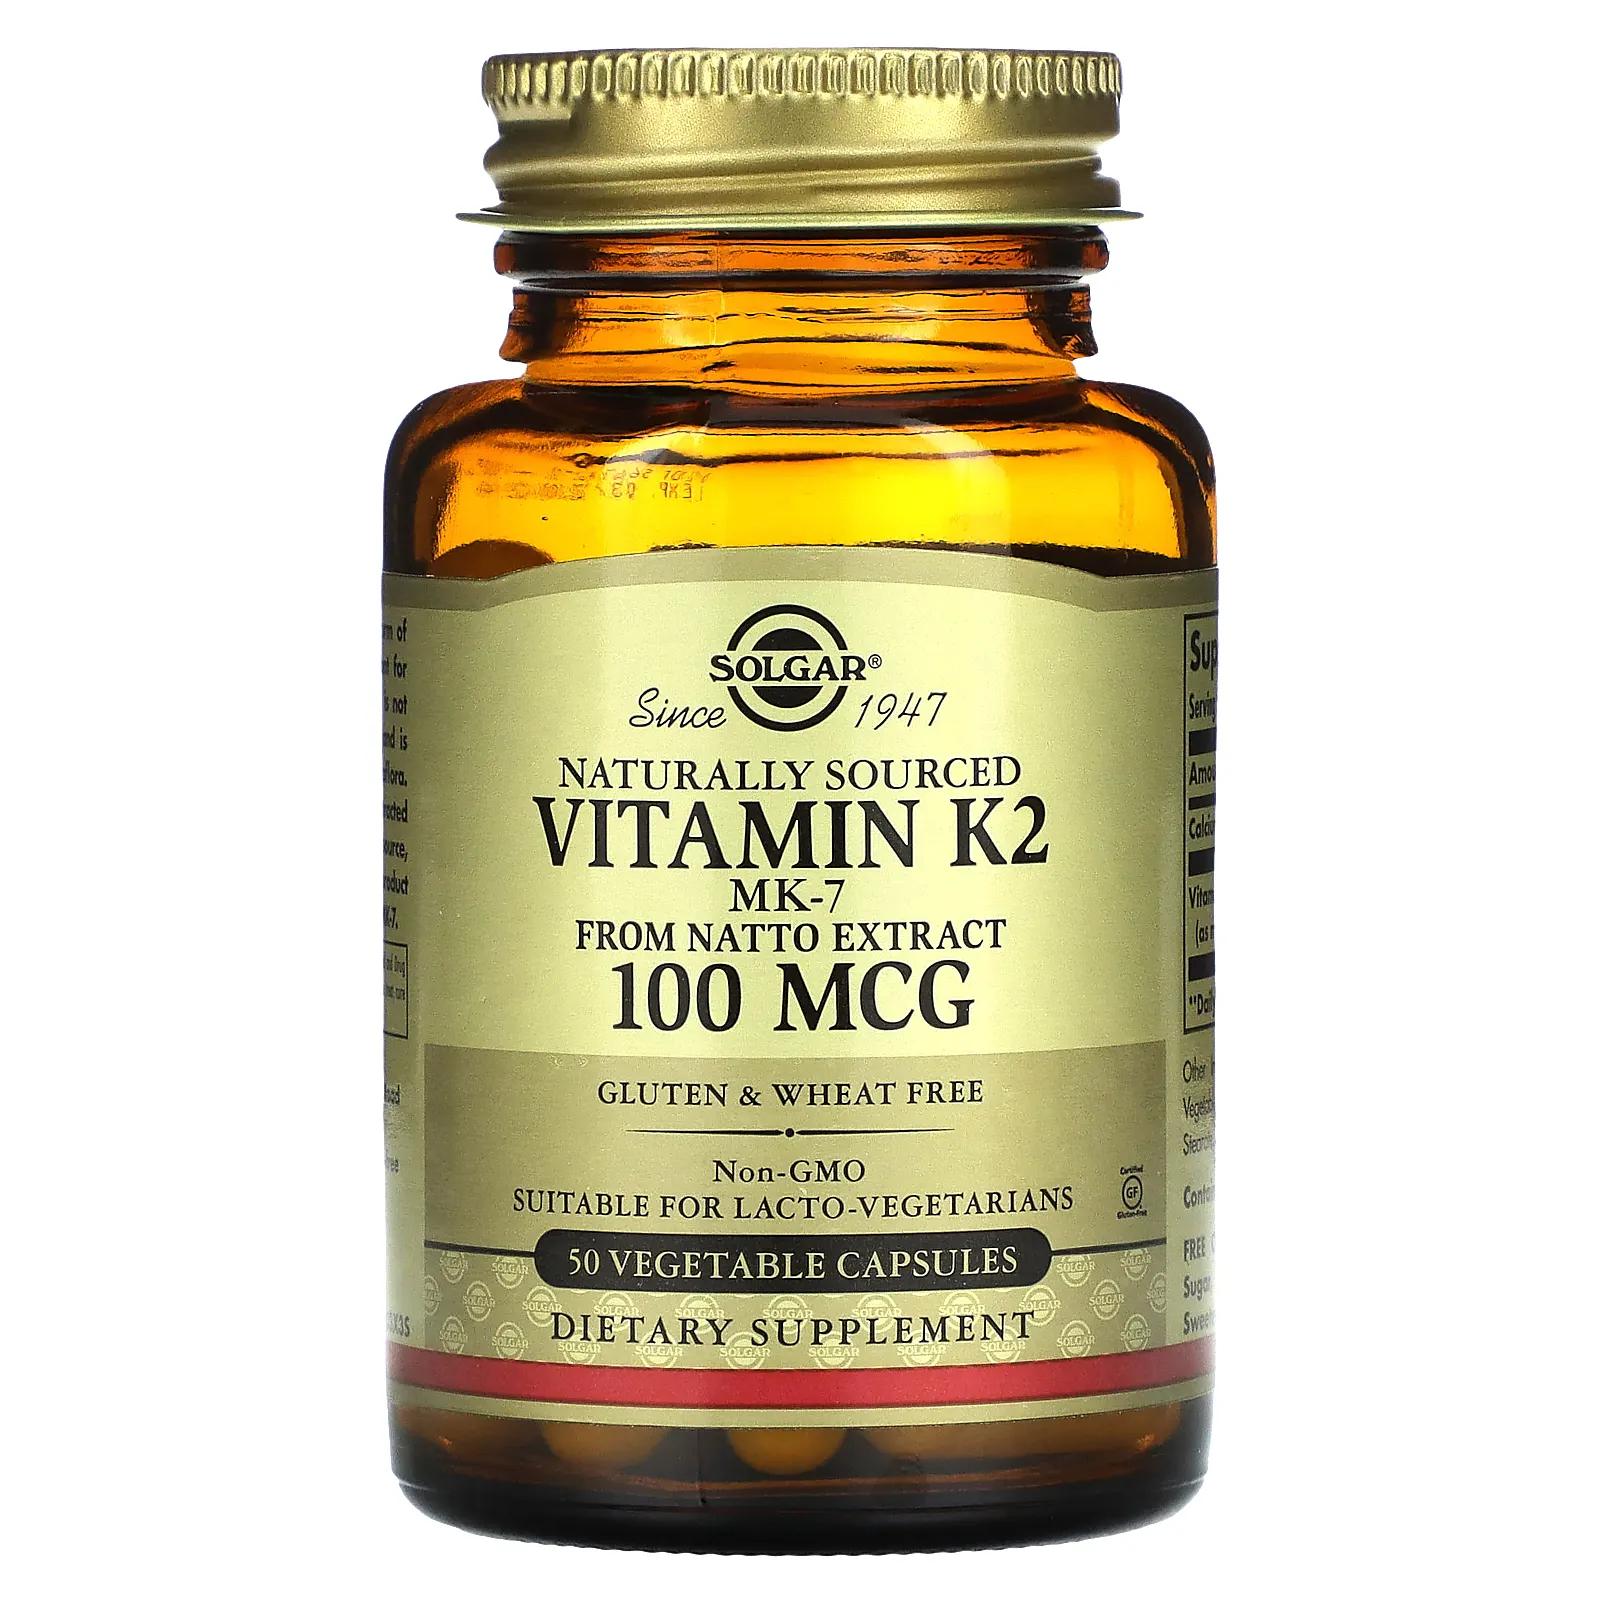 Solgar Naturally Sourced Vitamin K2 100 mcg 50 Vegetable Capsules